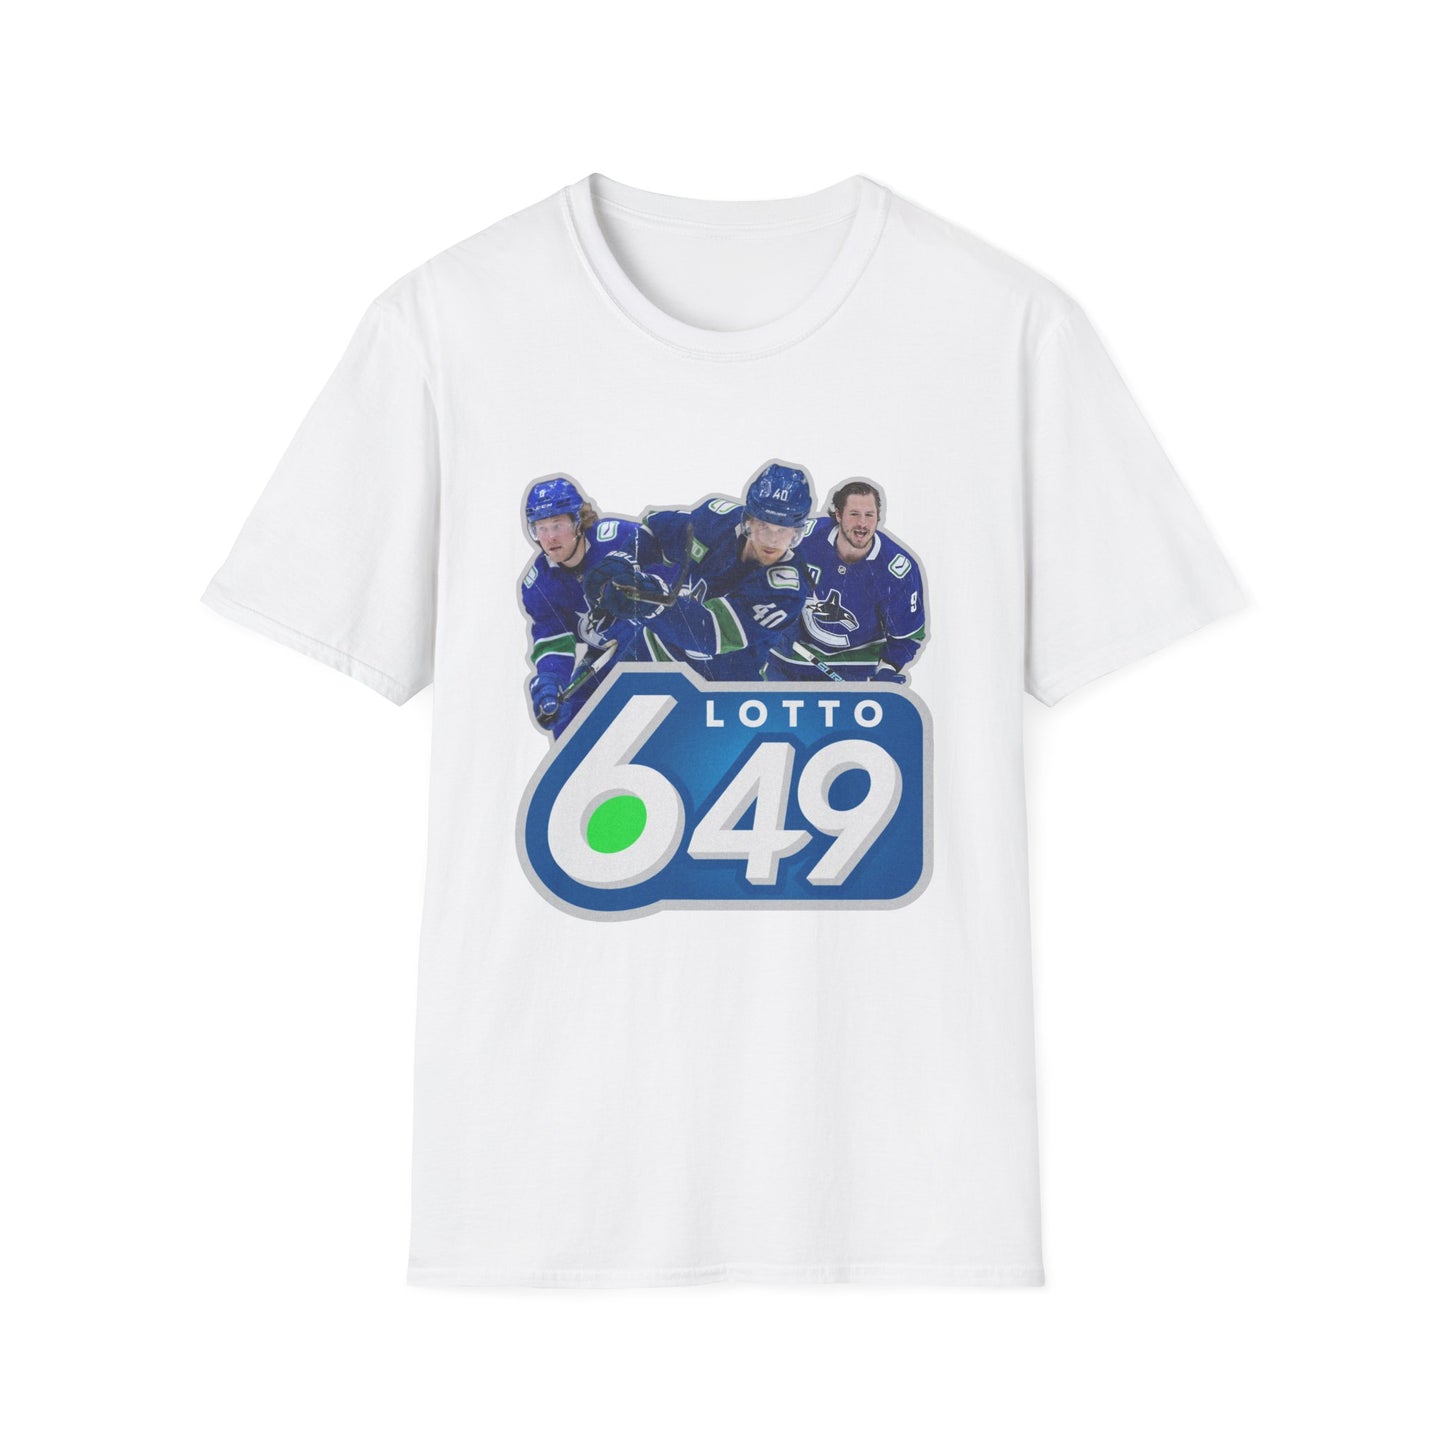 Lotto 649 T-Shirt